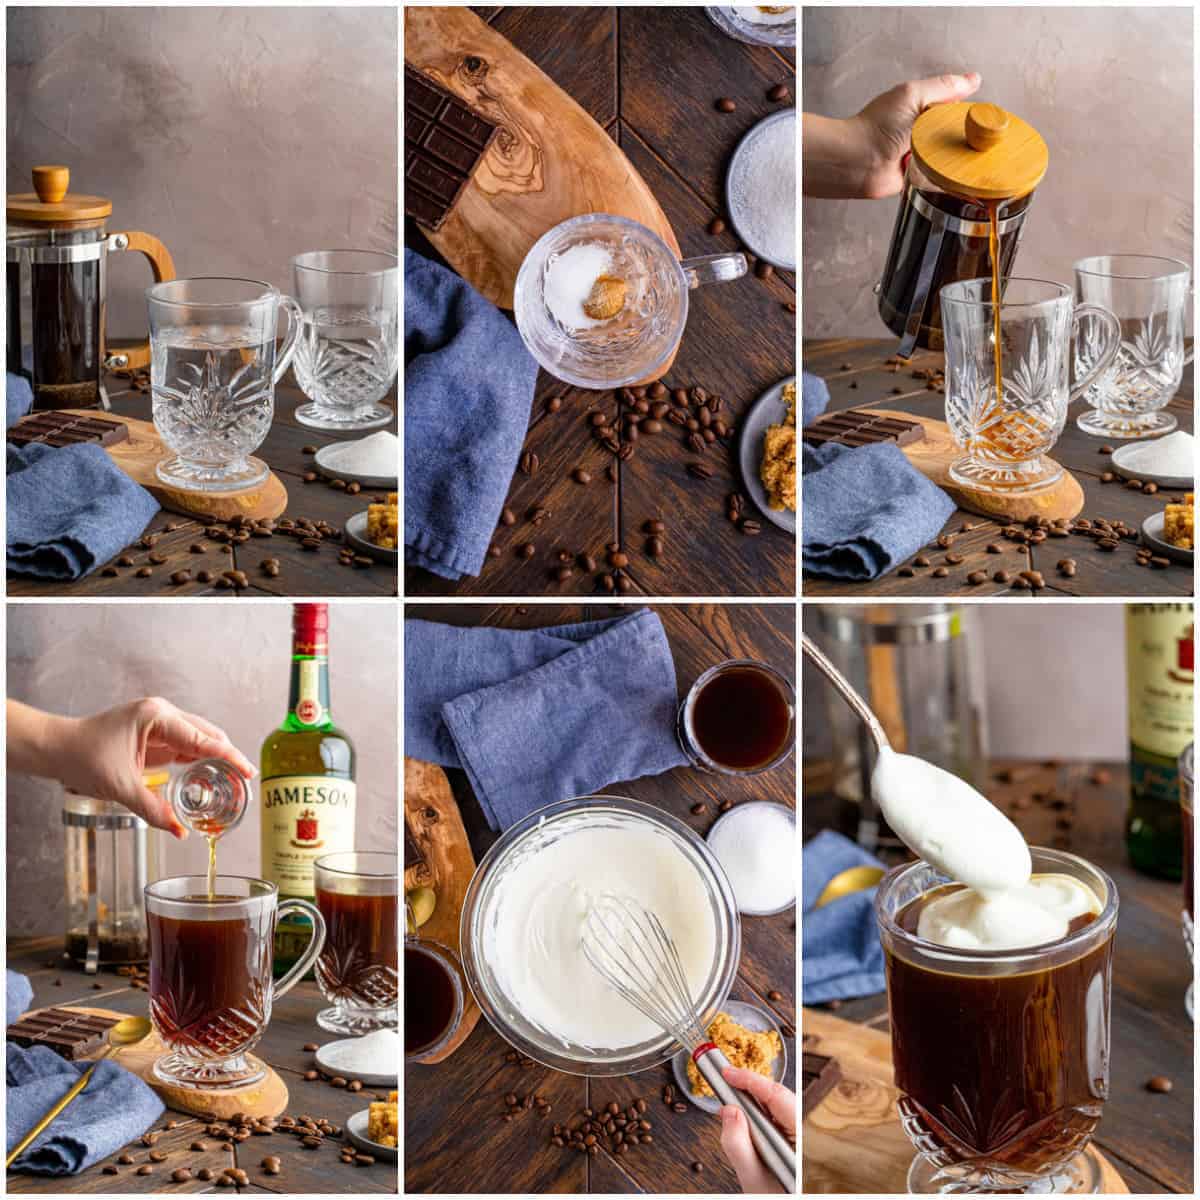 Step by step photos on how to make an Irish Coffee Recipe.